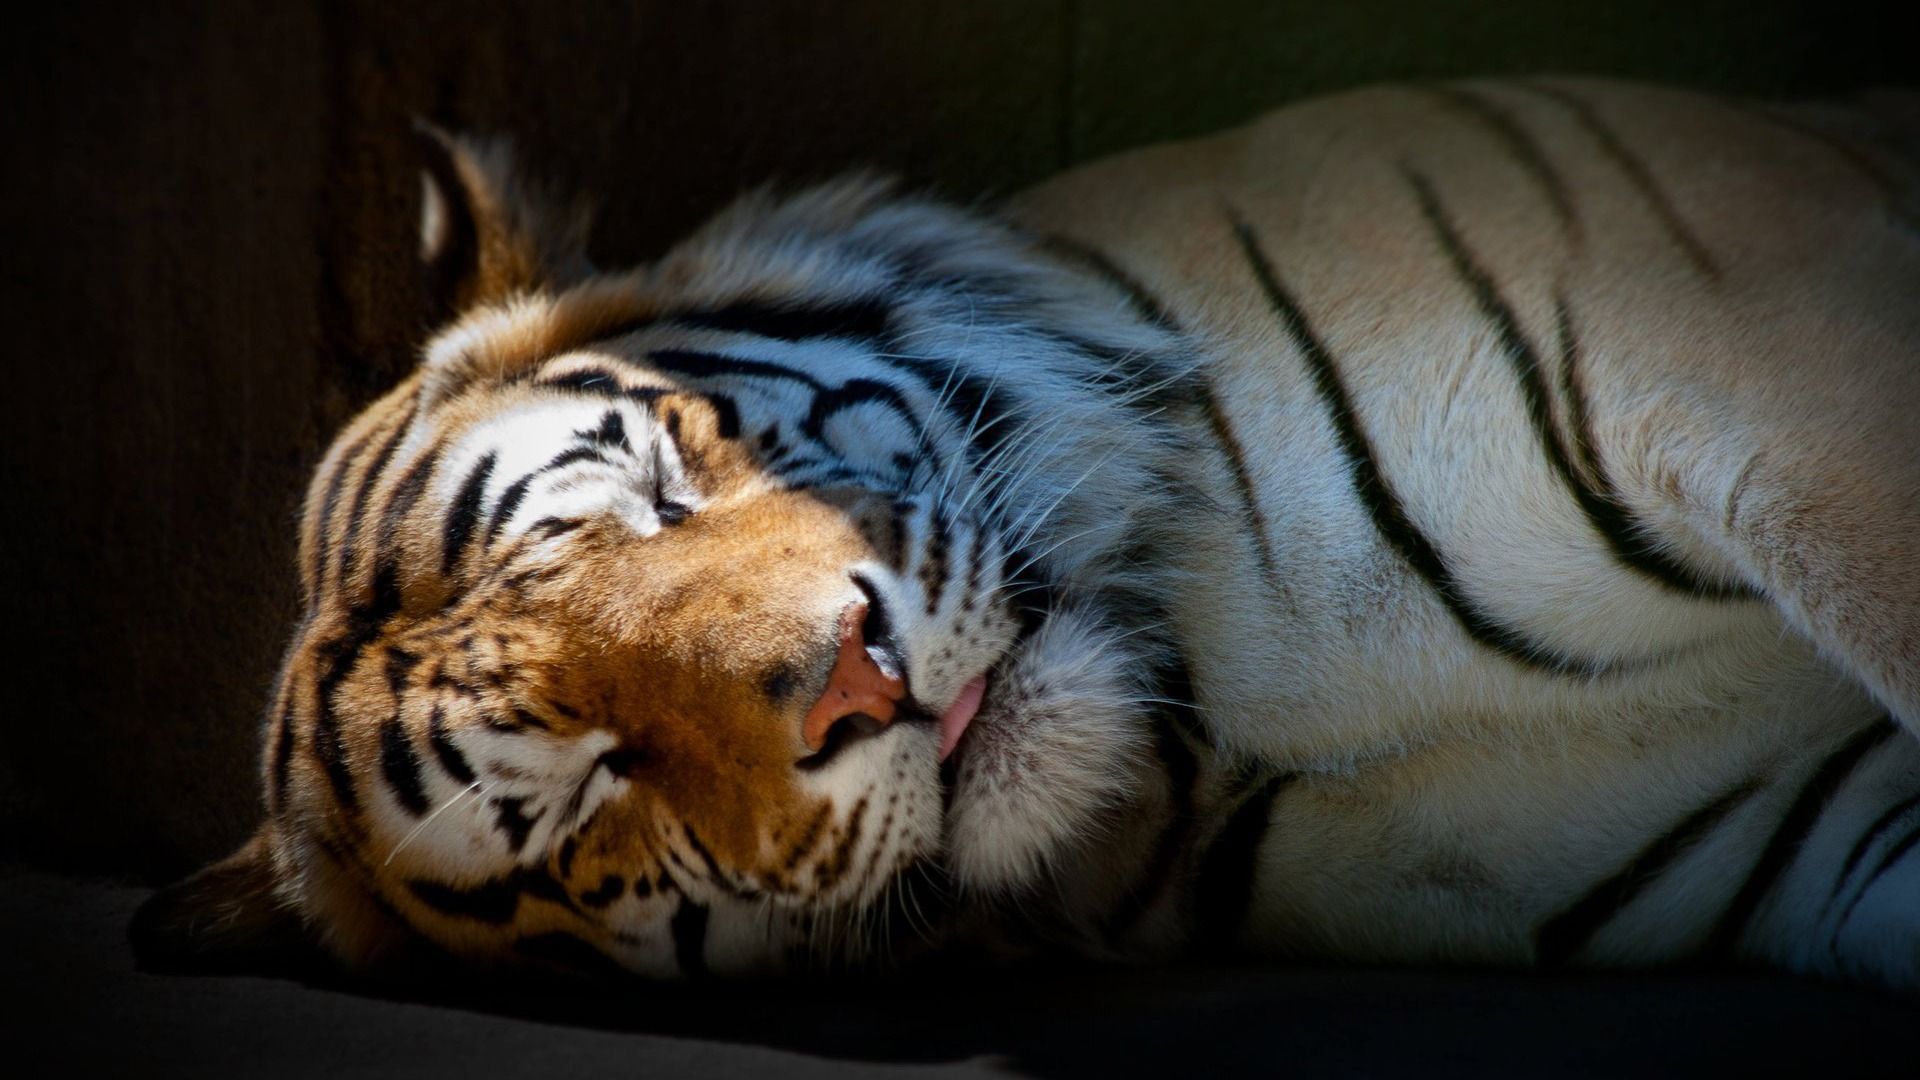 HD Quality Tiger Cute Sleeping Tiger Wallpaper - SiWallpaper 20575